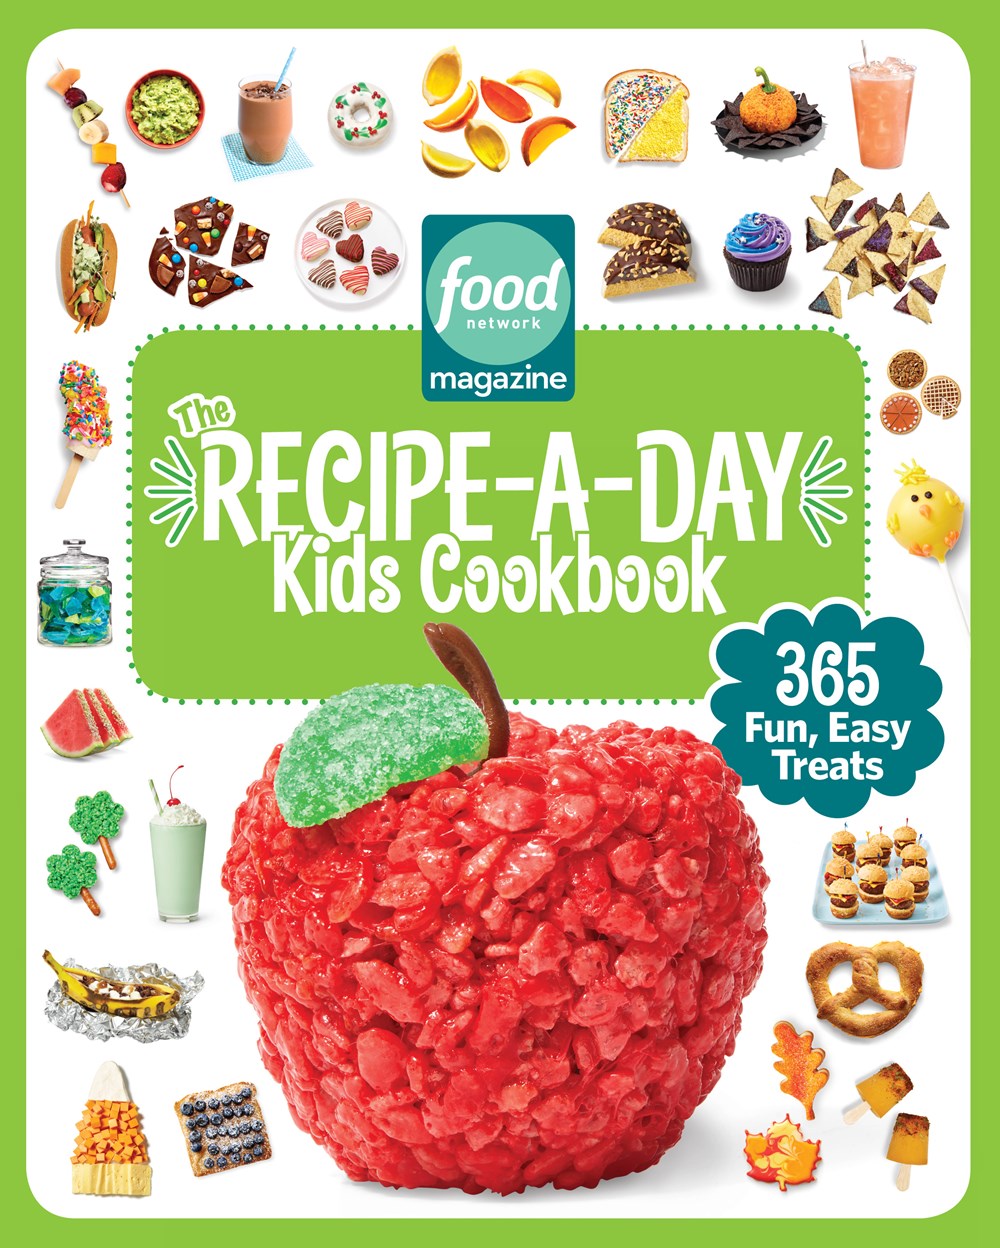 Food Network Magazine The Recipe-A-Day Kids Cookbook : 365 Fun, Easy Treats